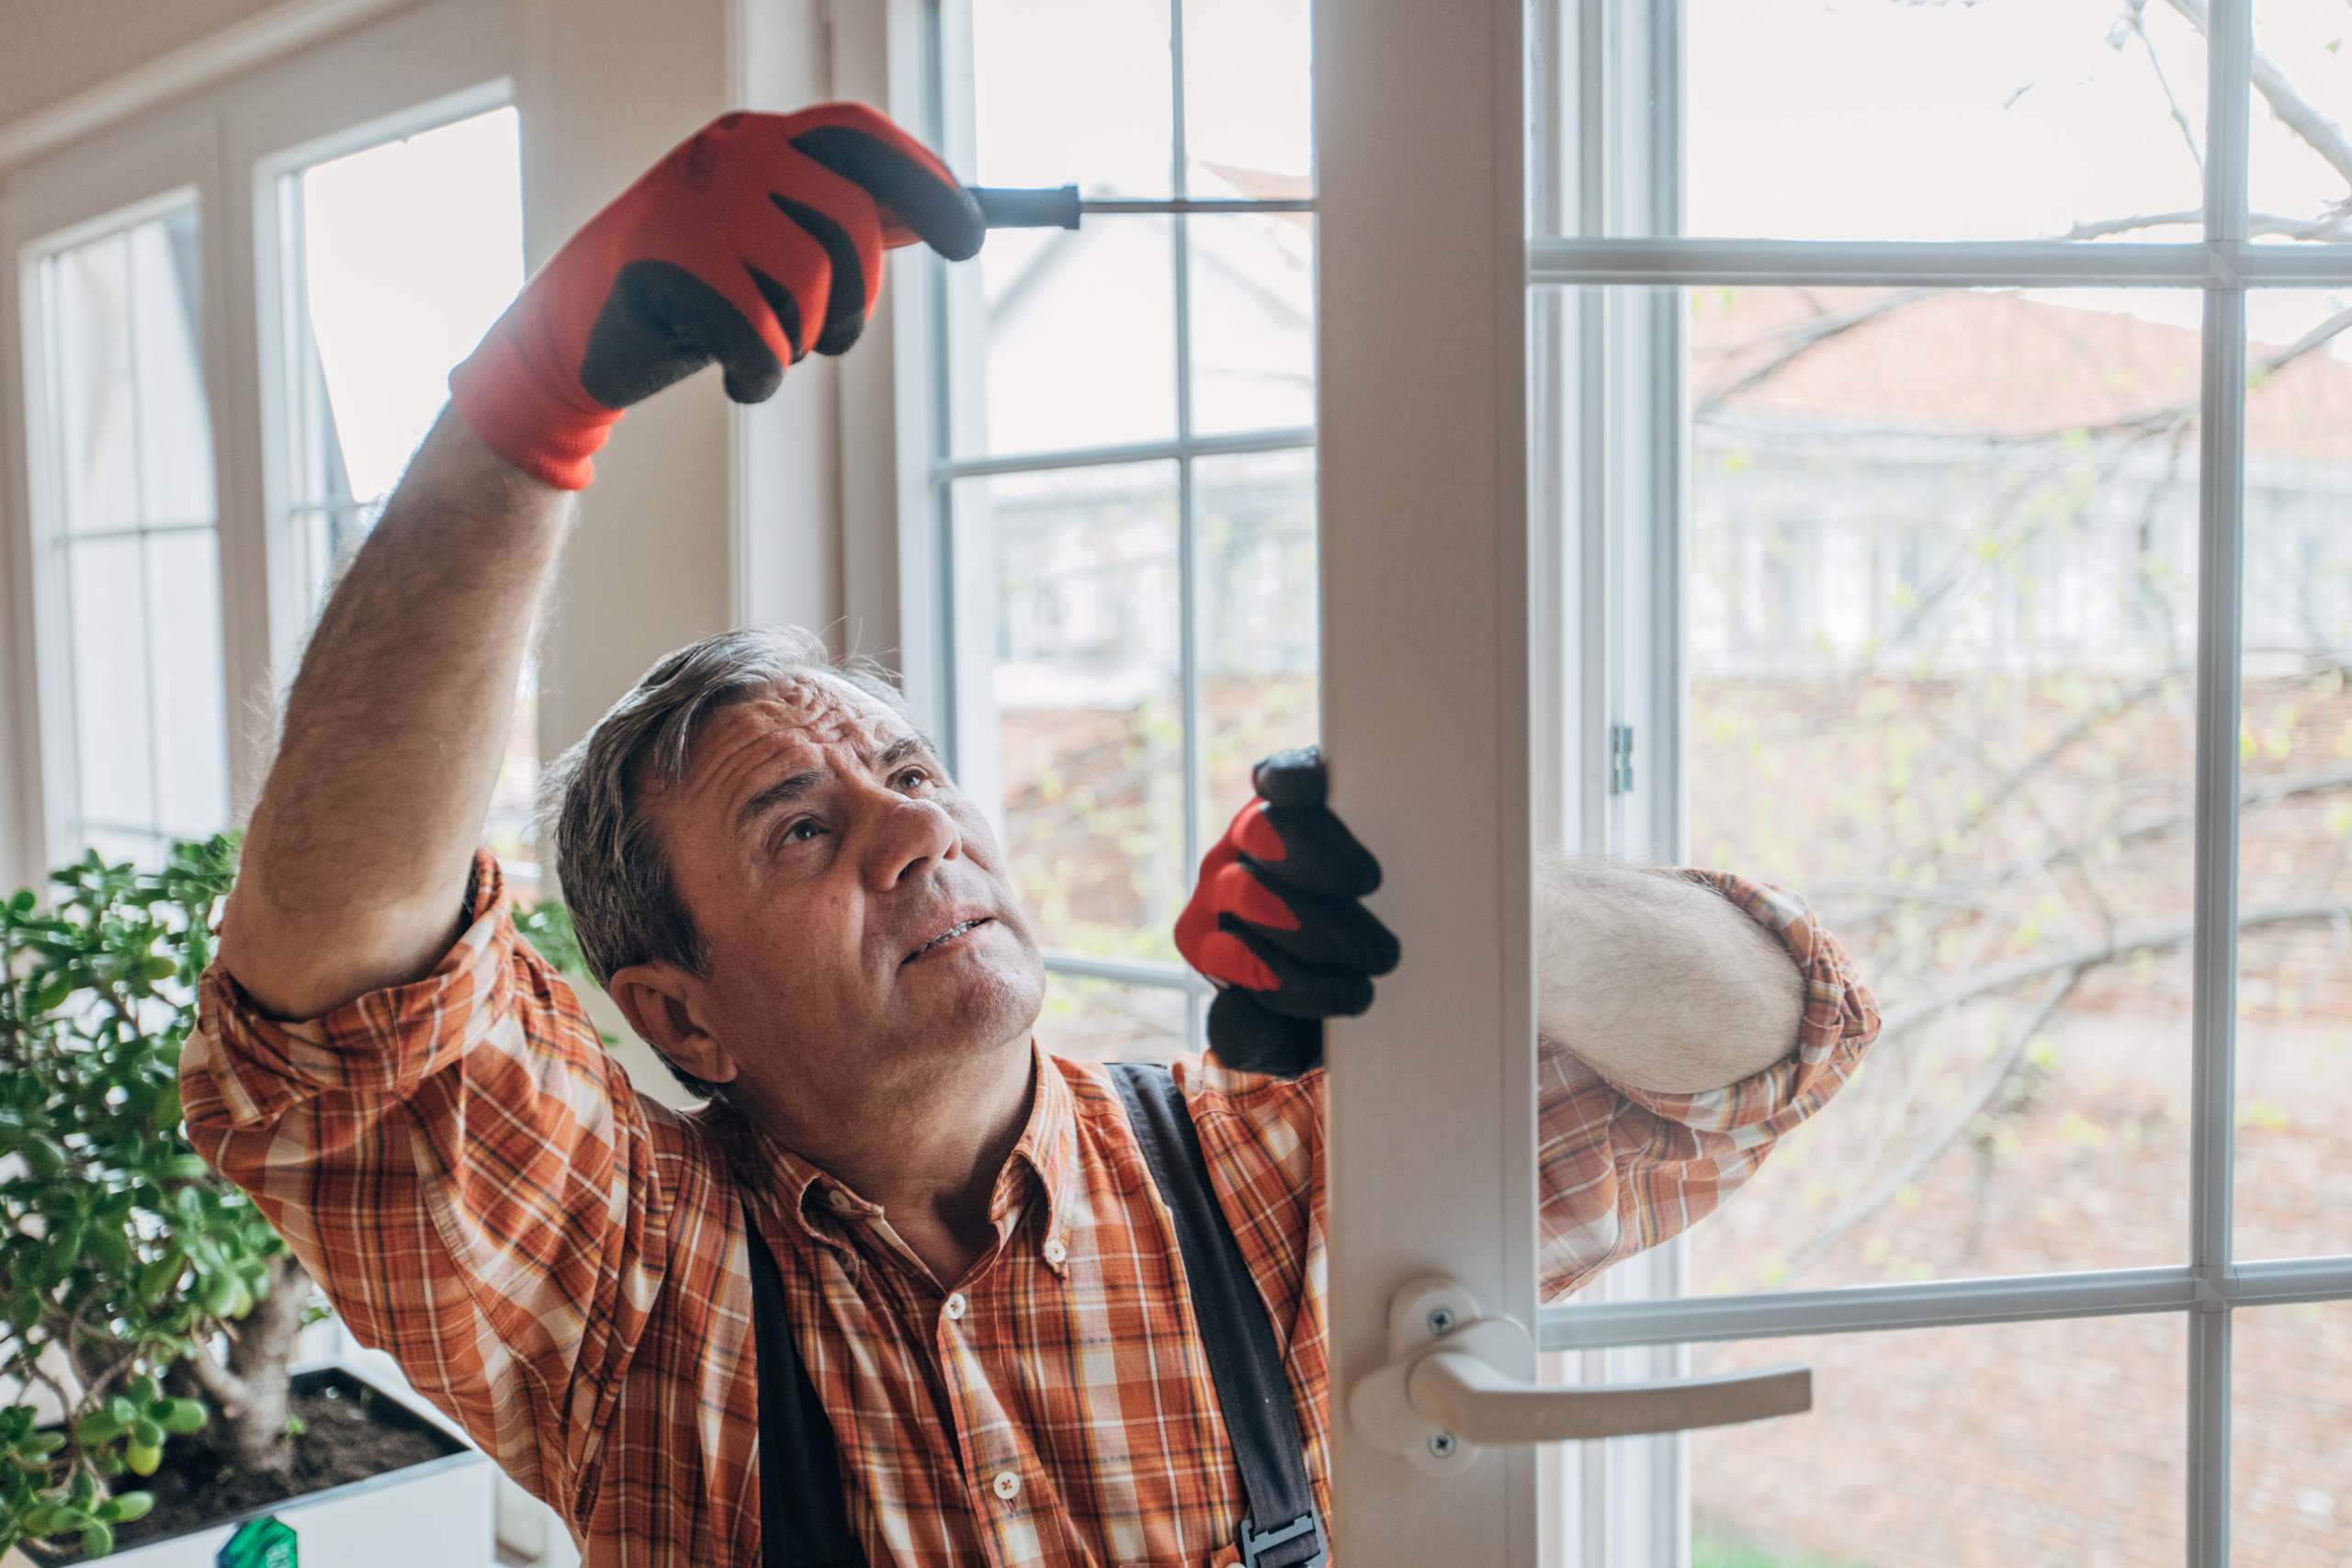 Handyman repairs a window